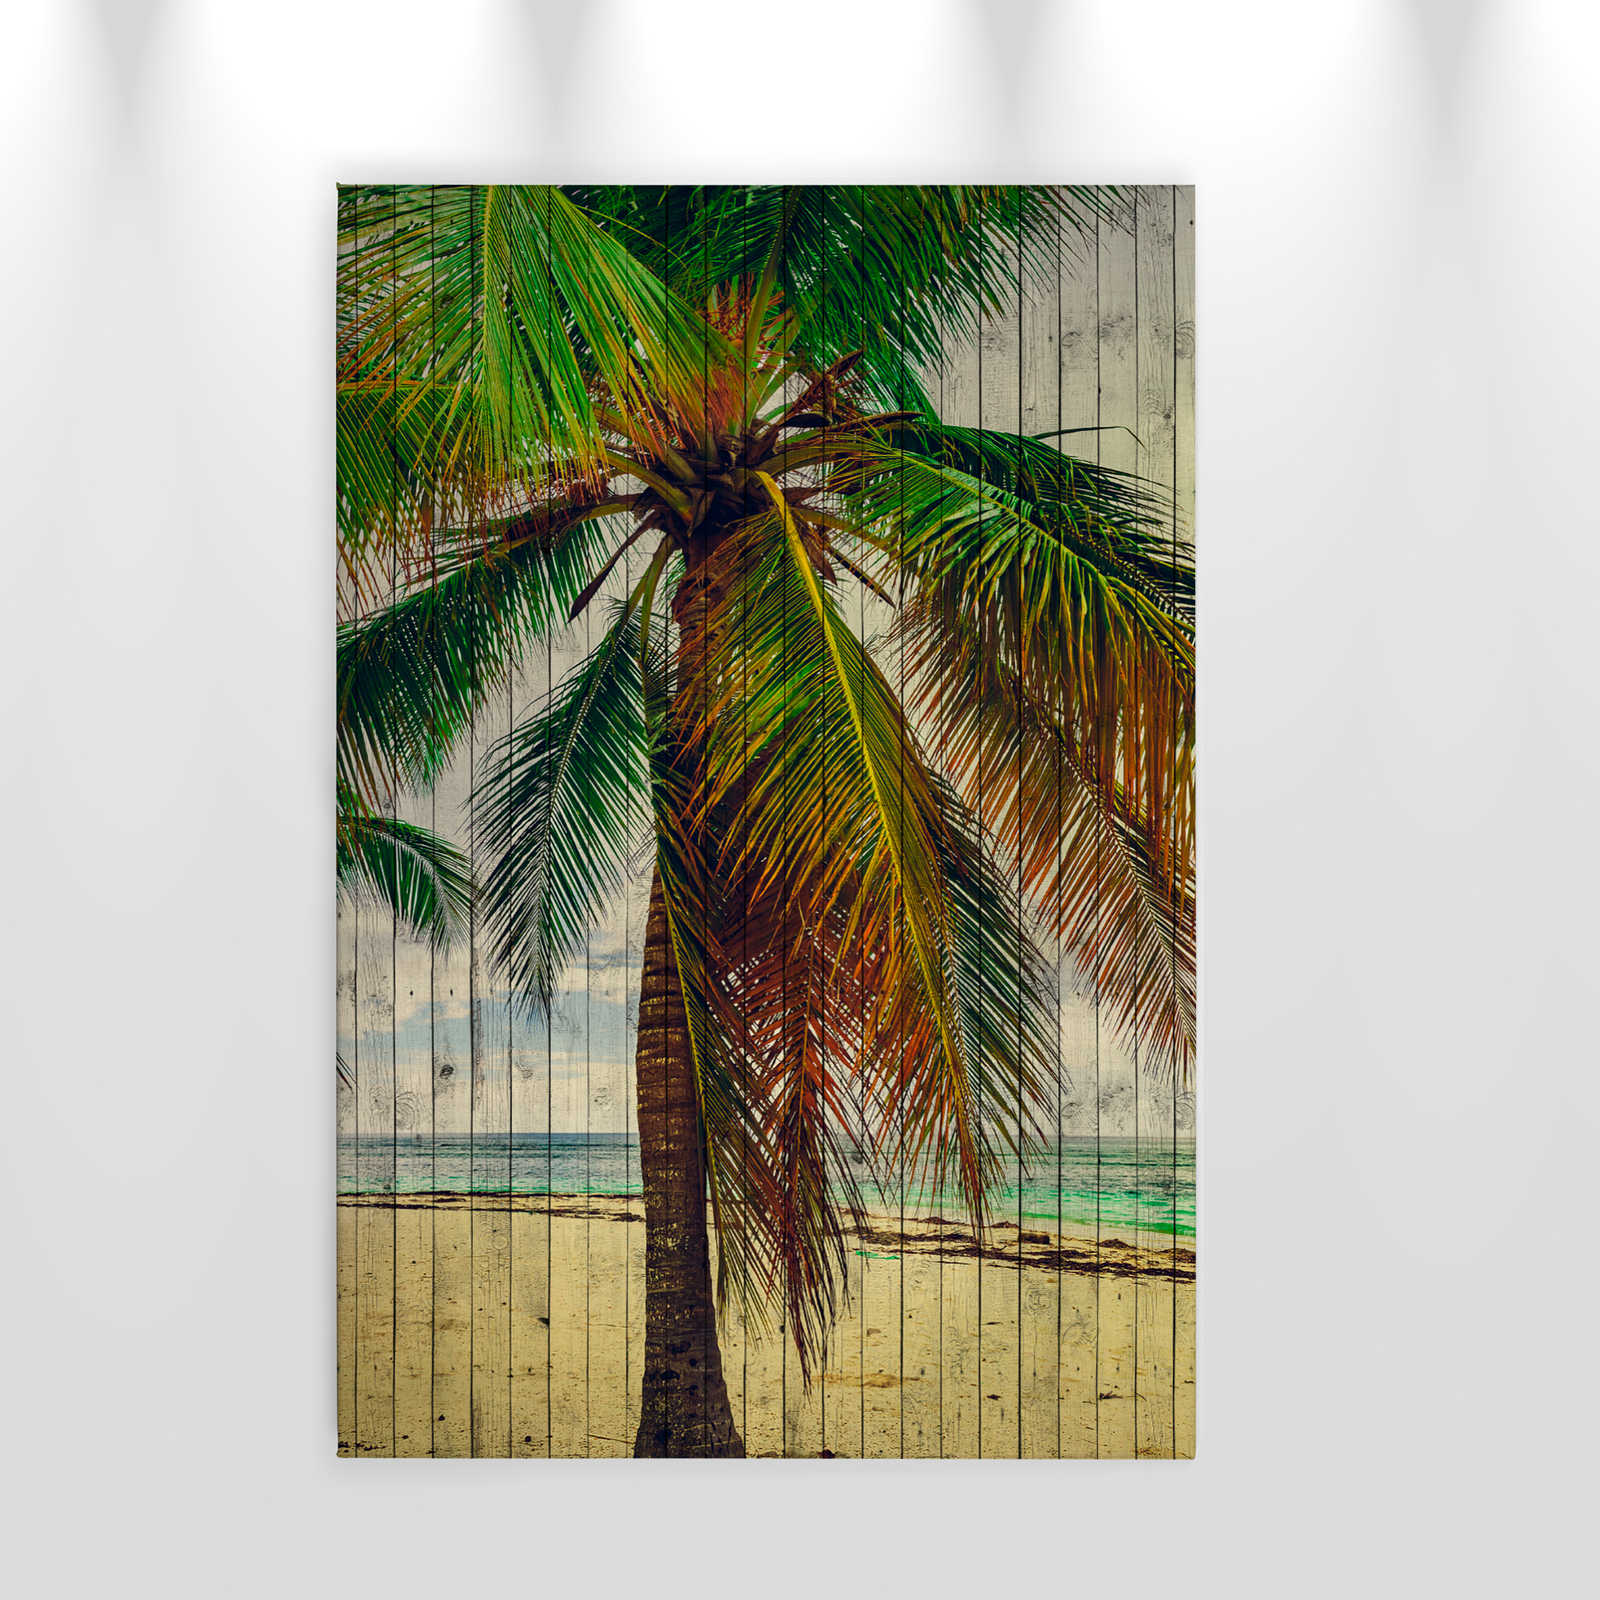             Tahiti 3 - Palmen Leinwandbild mit Urlaubsfeeling - Holzpaneele Struktur – 0,60 m x 0,90 m
        